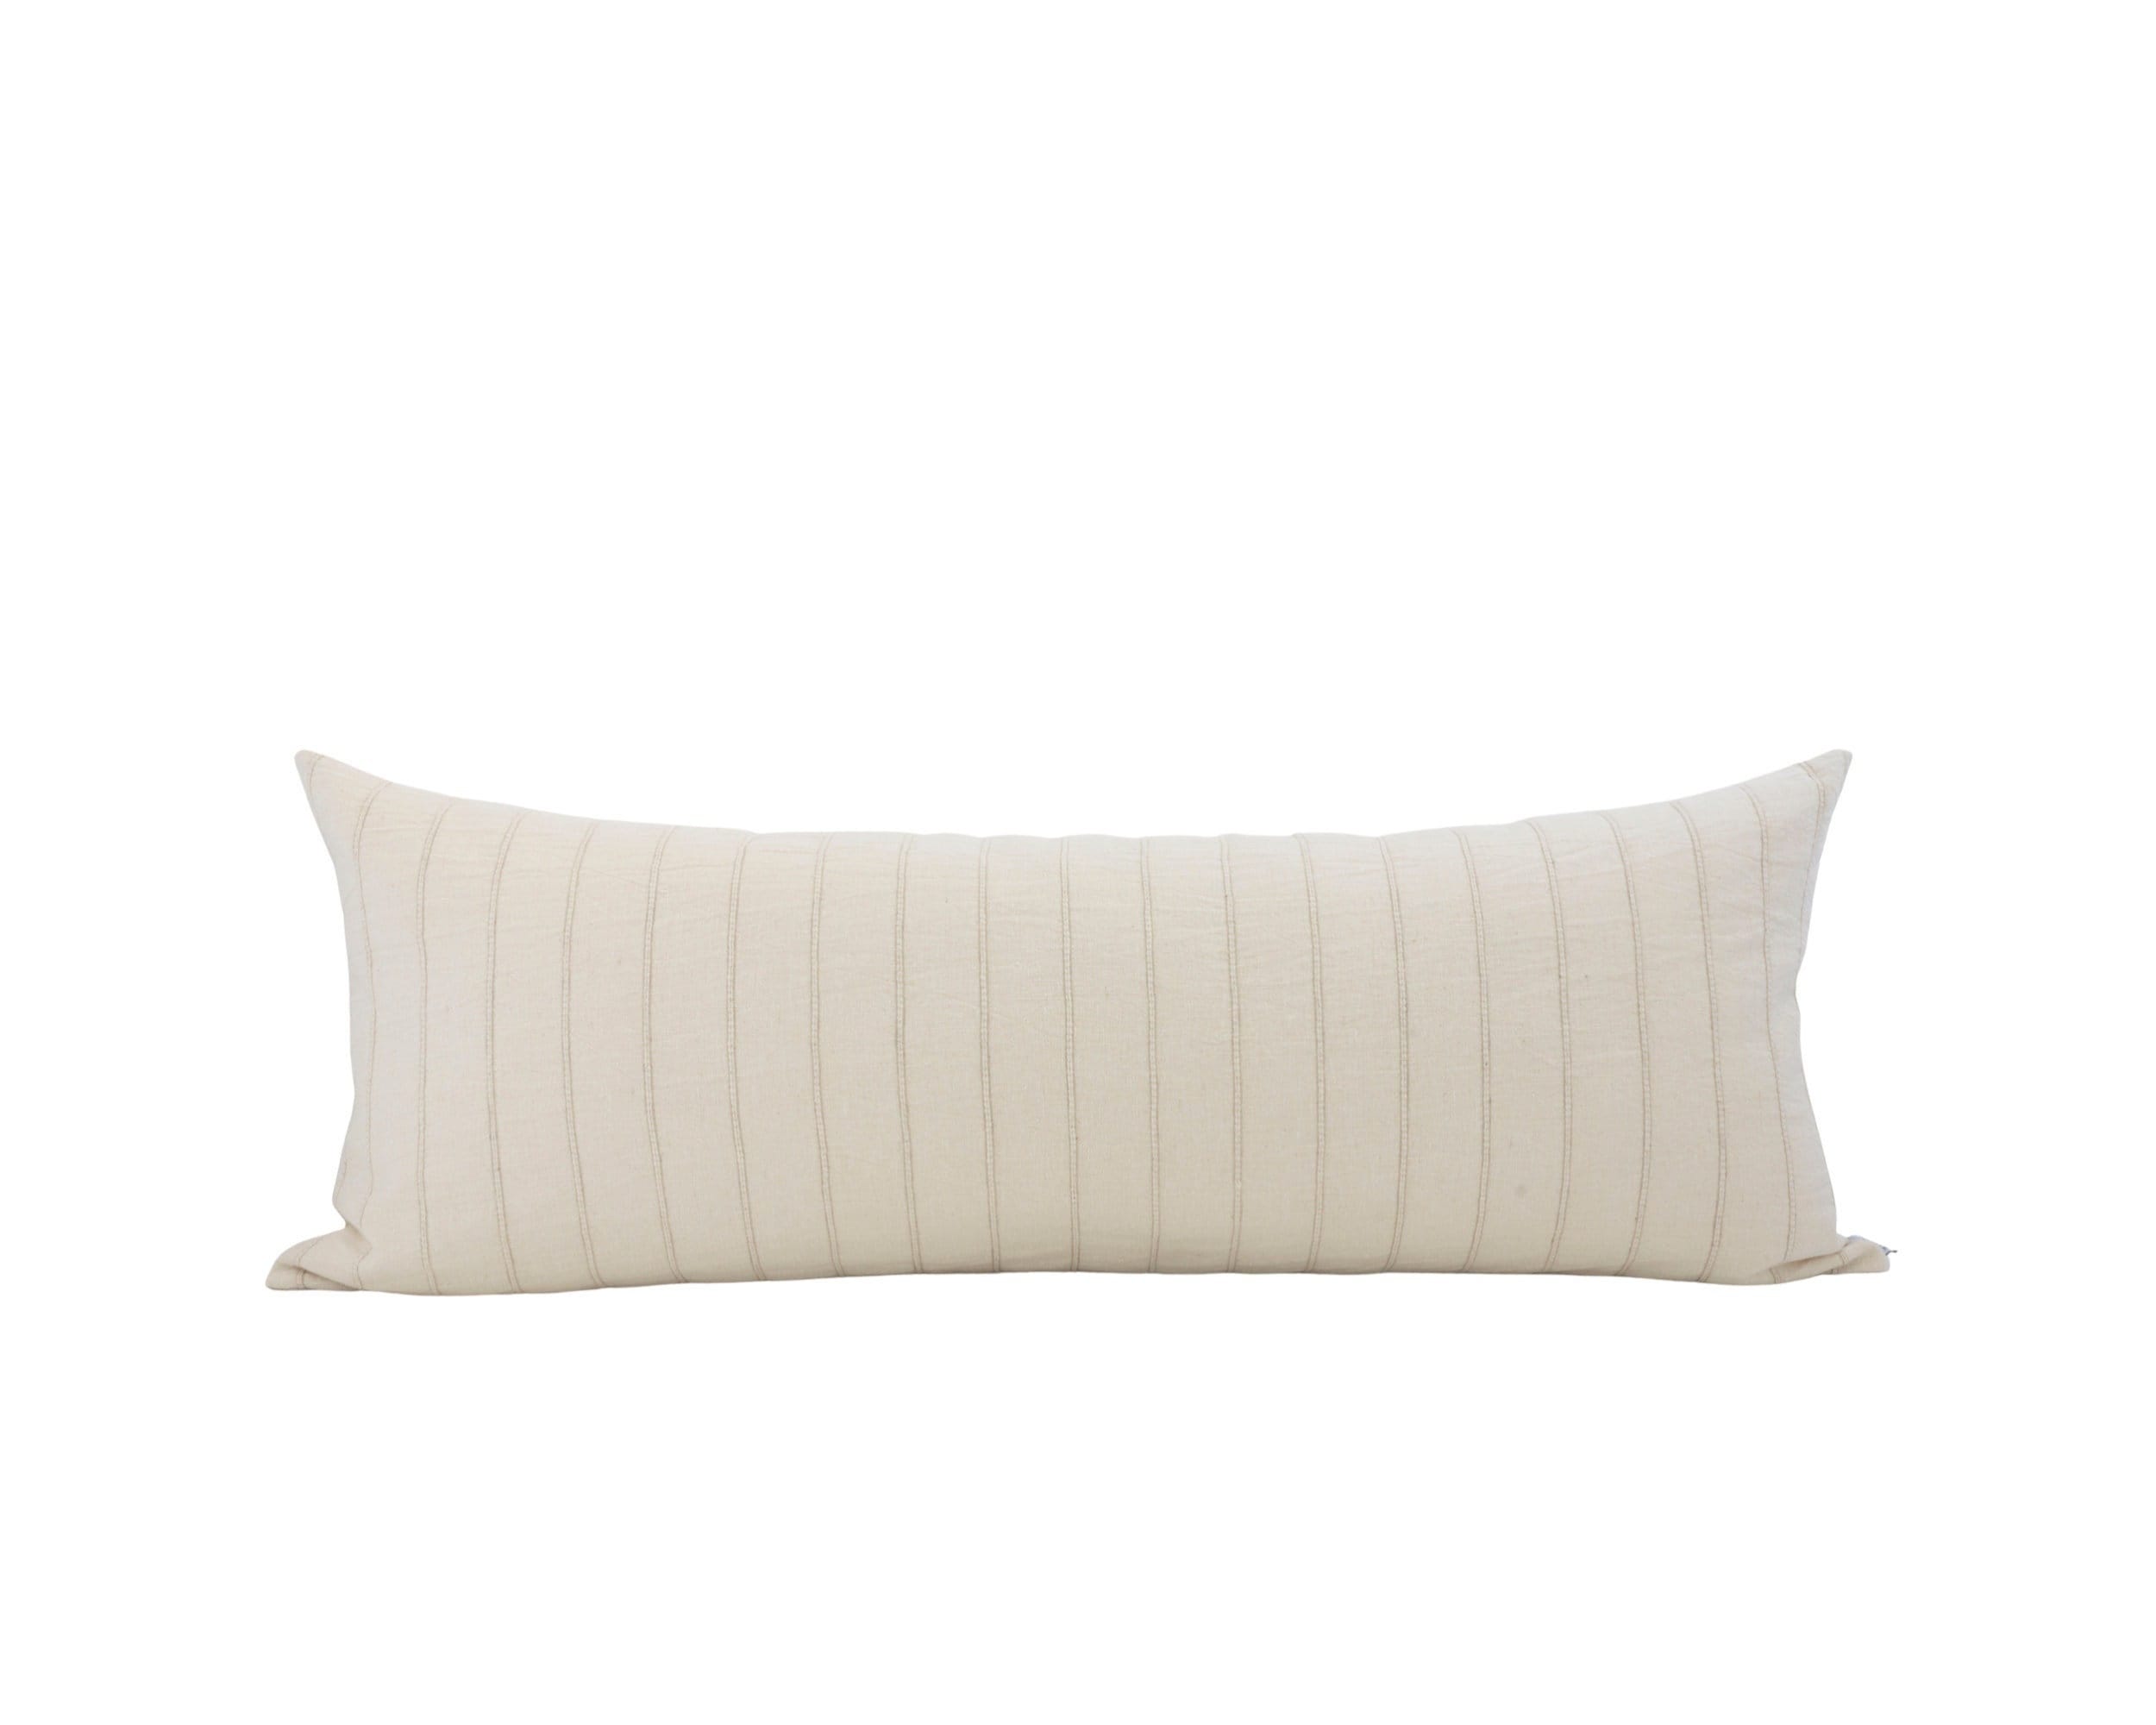 Franklin XL Lumbar Pillow Cover